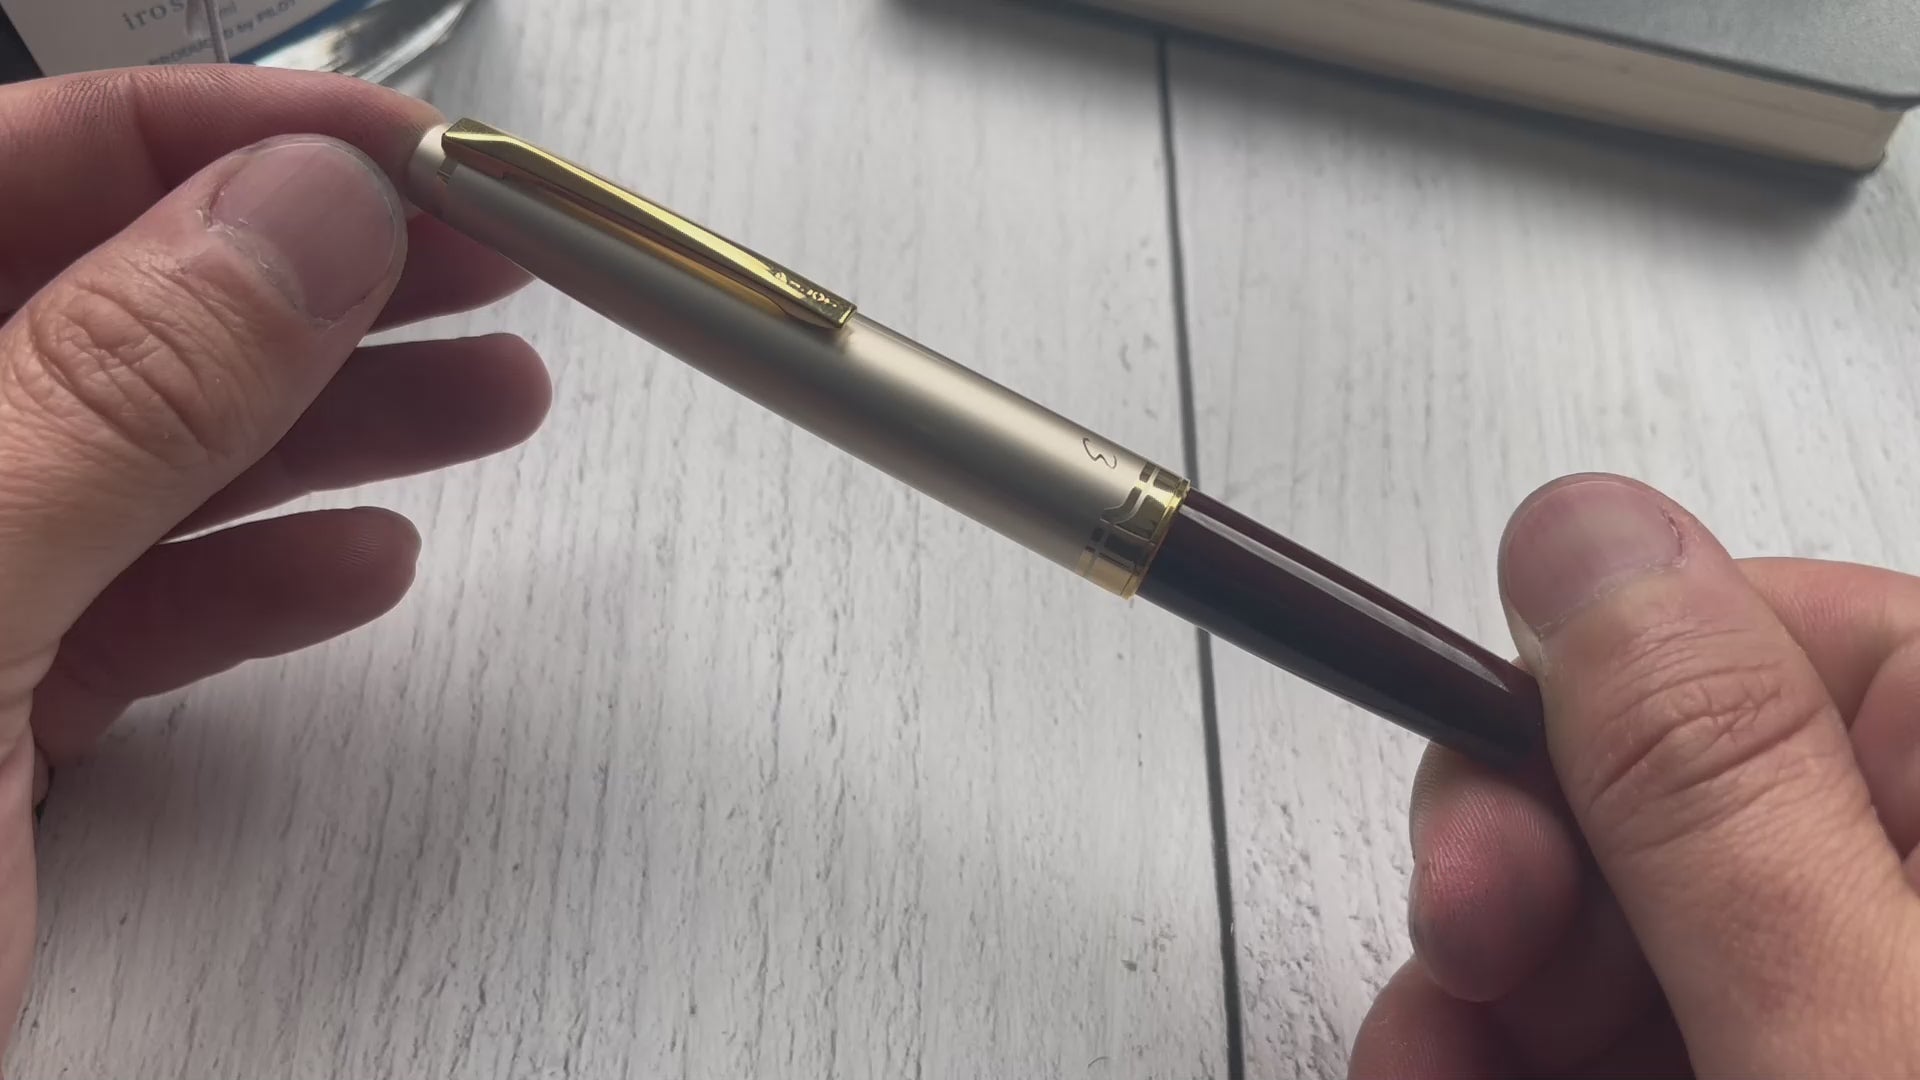 Video of a Pilot E95s fountain pen in hand